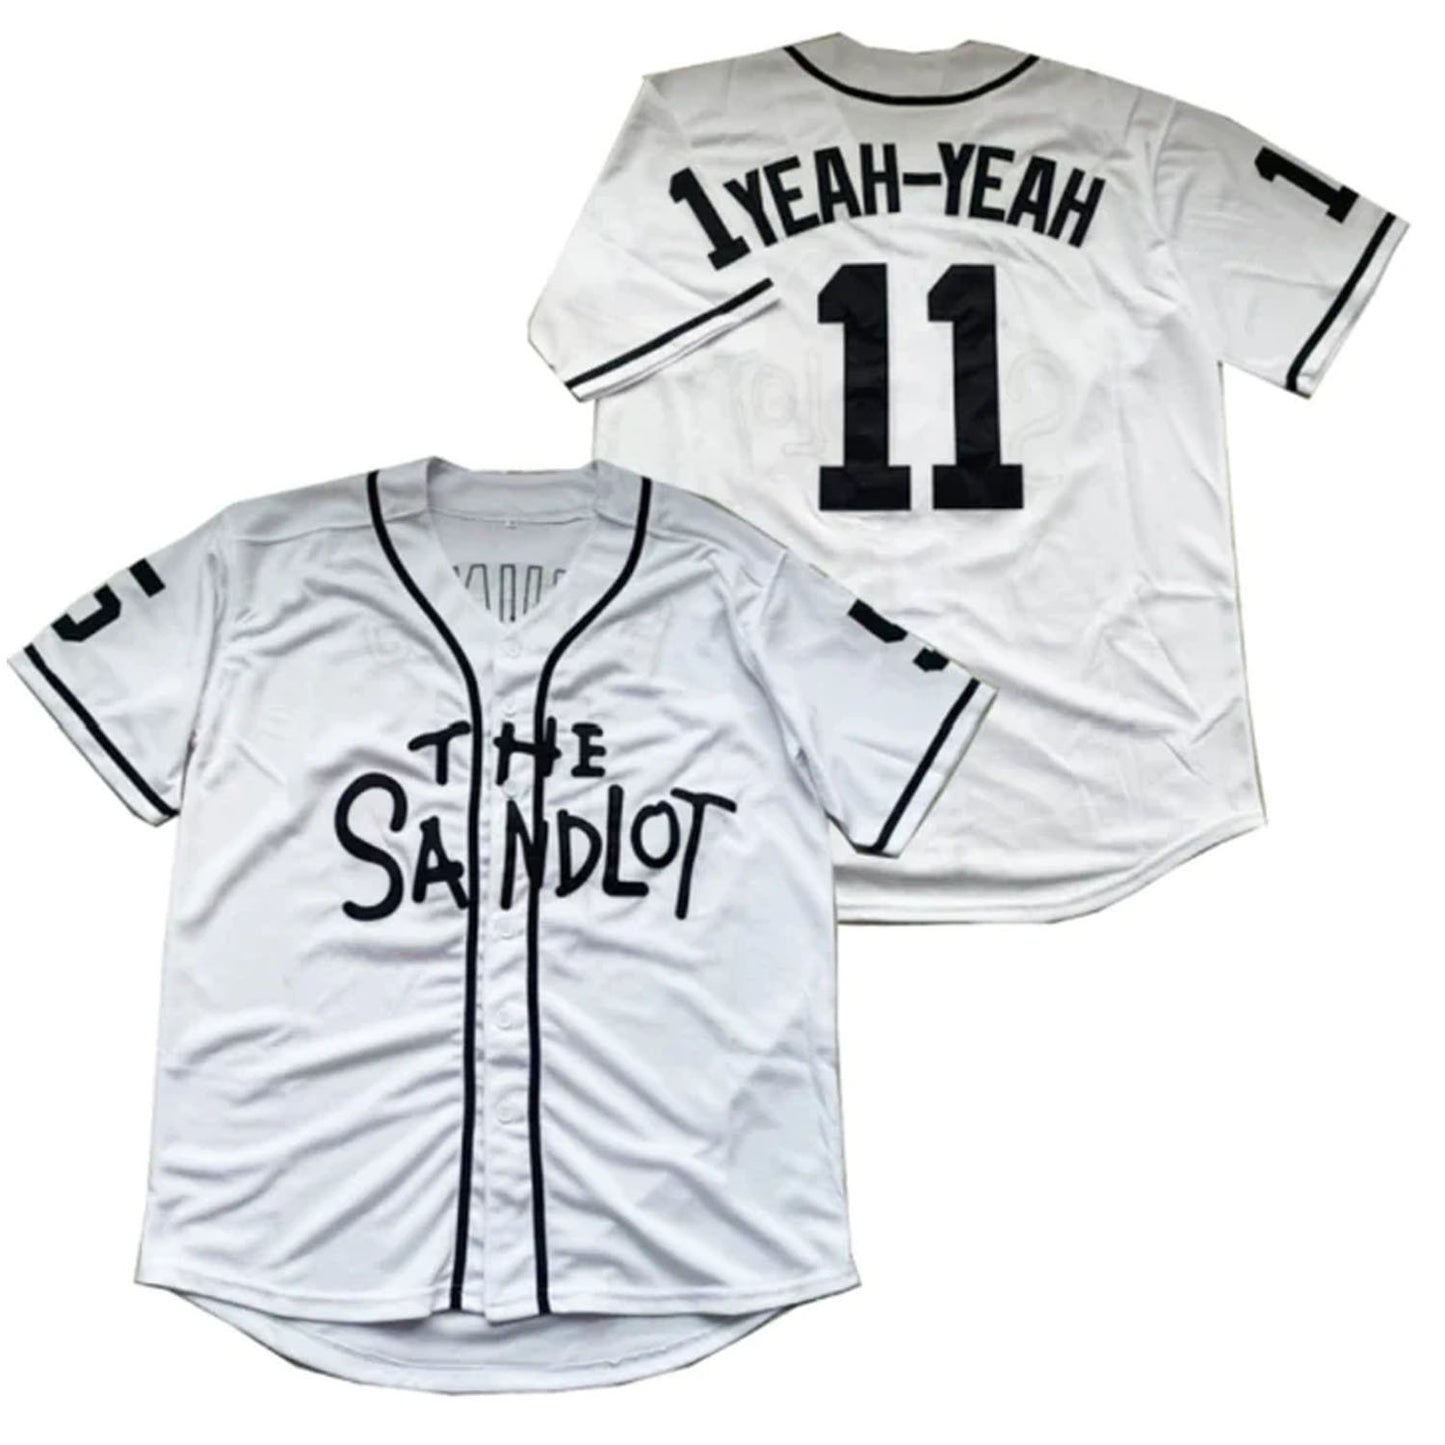 Yeah-Yeah #11 Sandlot Baseball jersey